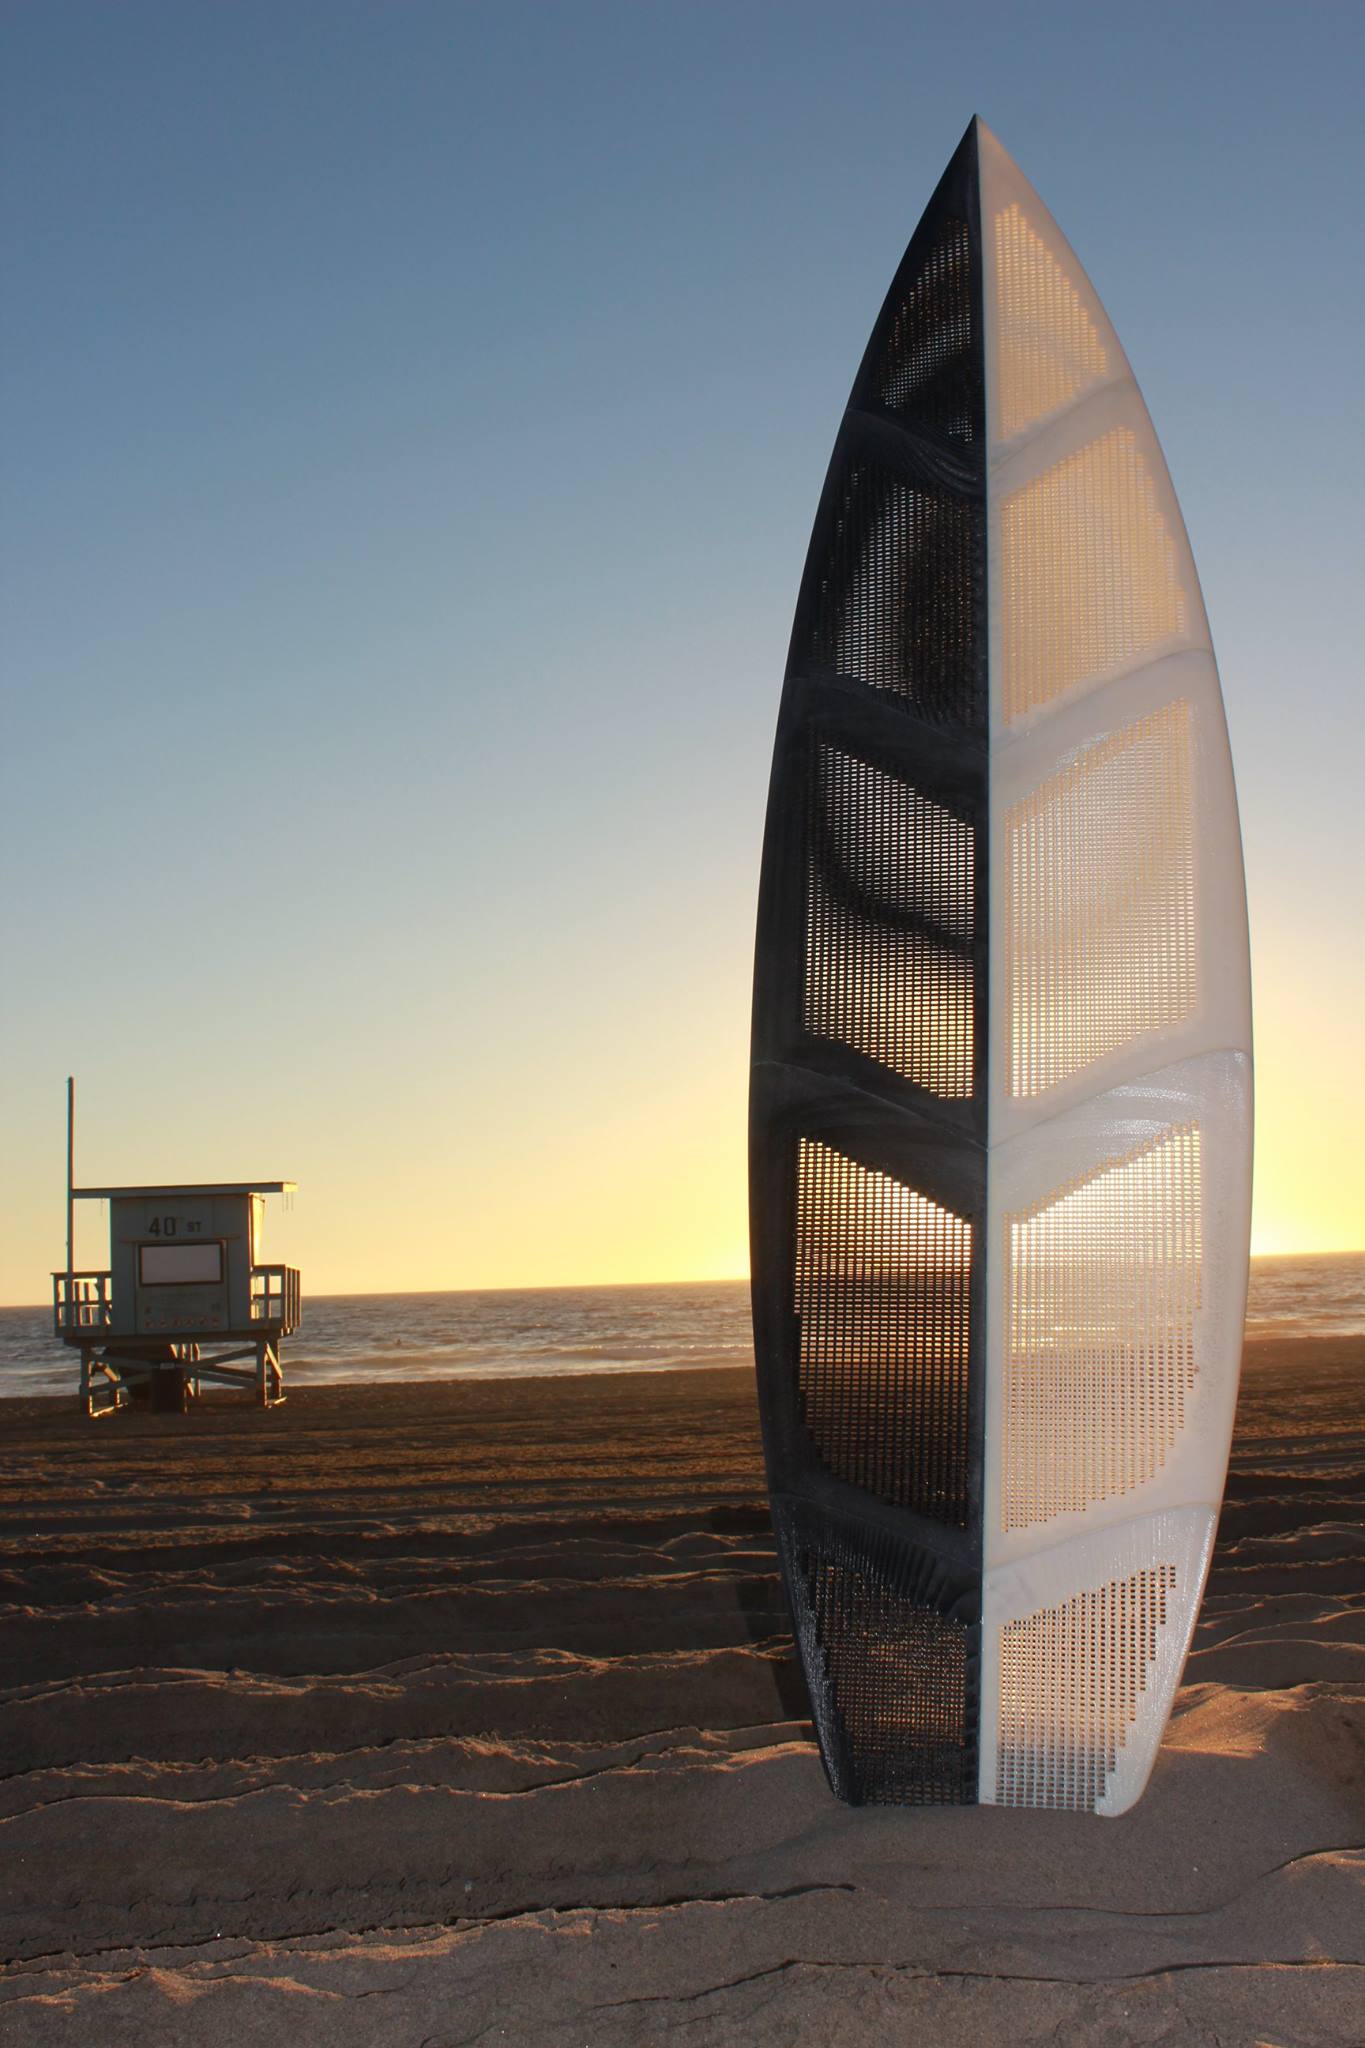 Redbull Proto3000 3D printed surfboard vertical